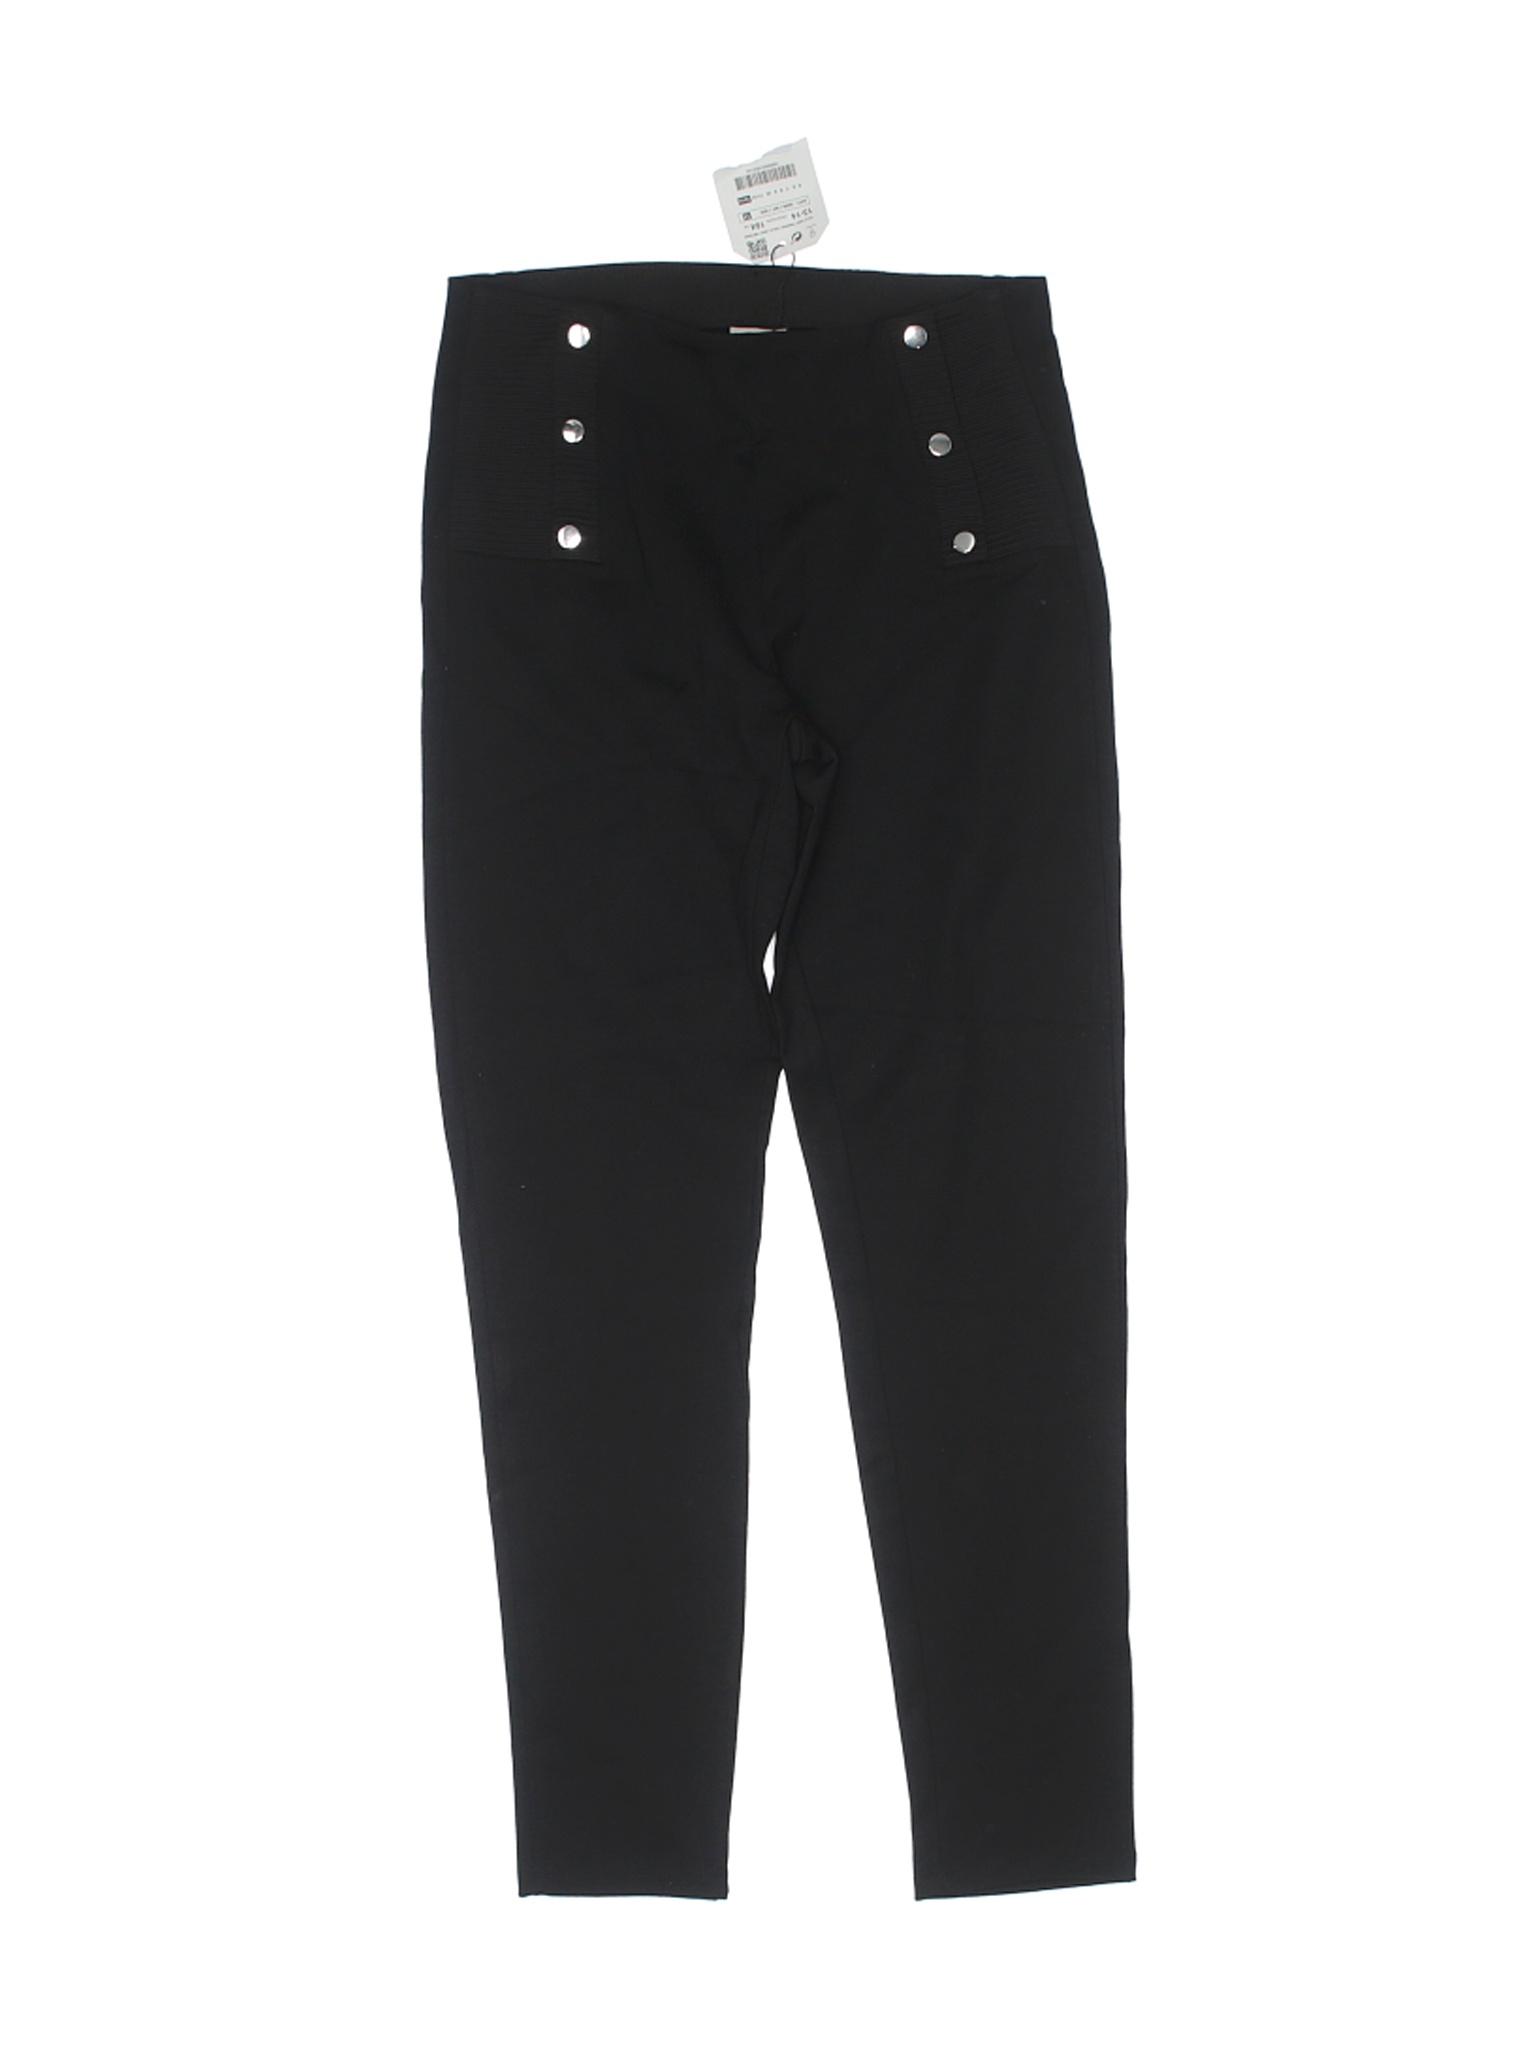 NWT Zara Girls Black Dress Pants 13 | eBay